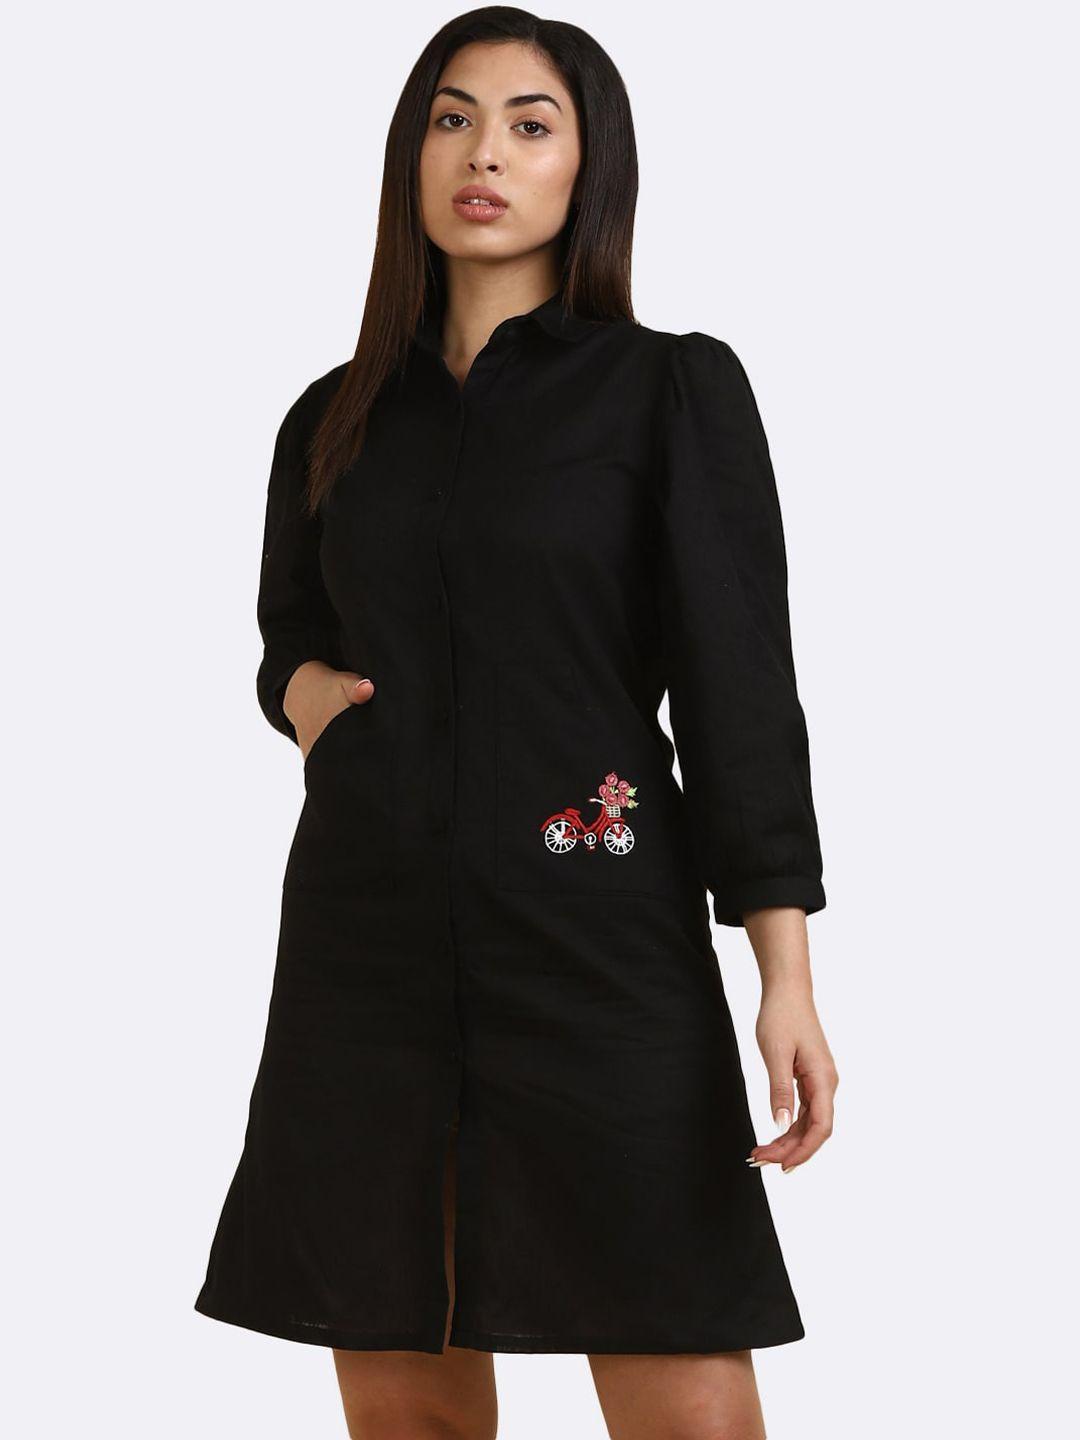 deebaco black shirt dress with embroidery